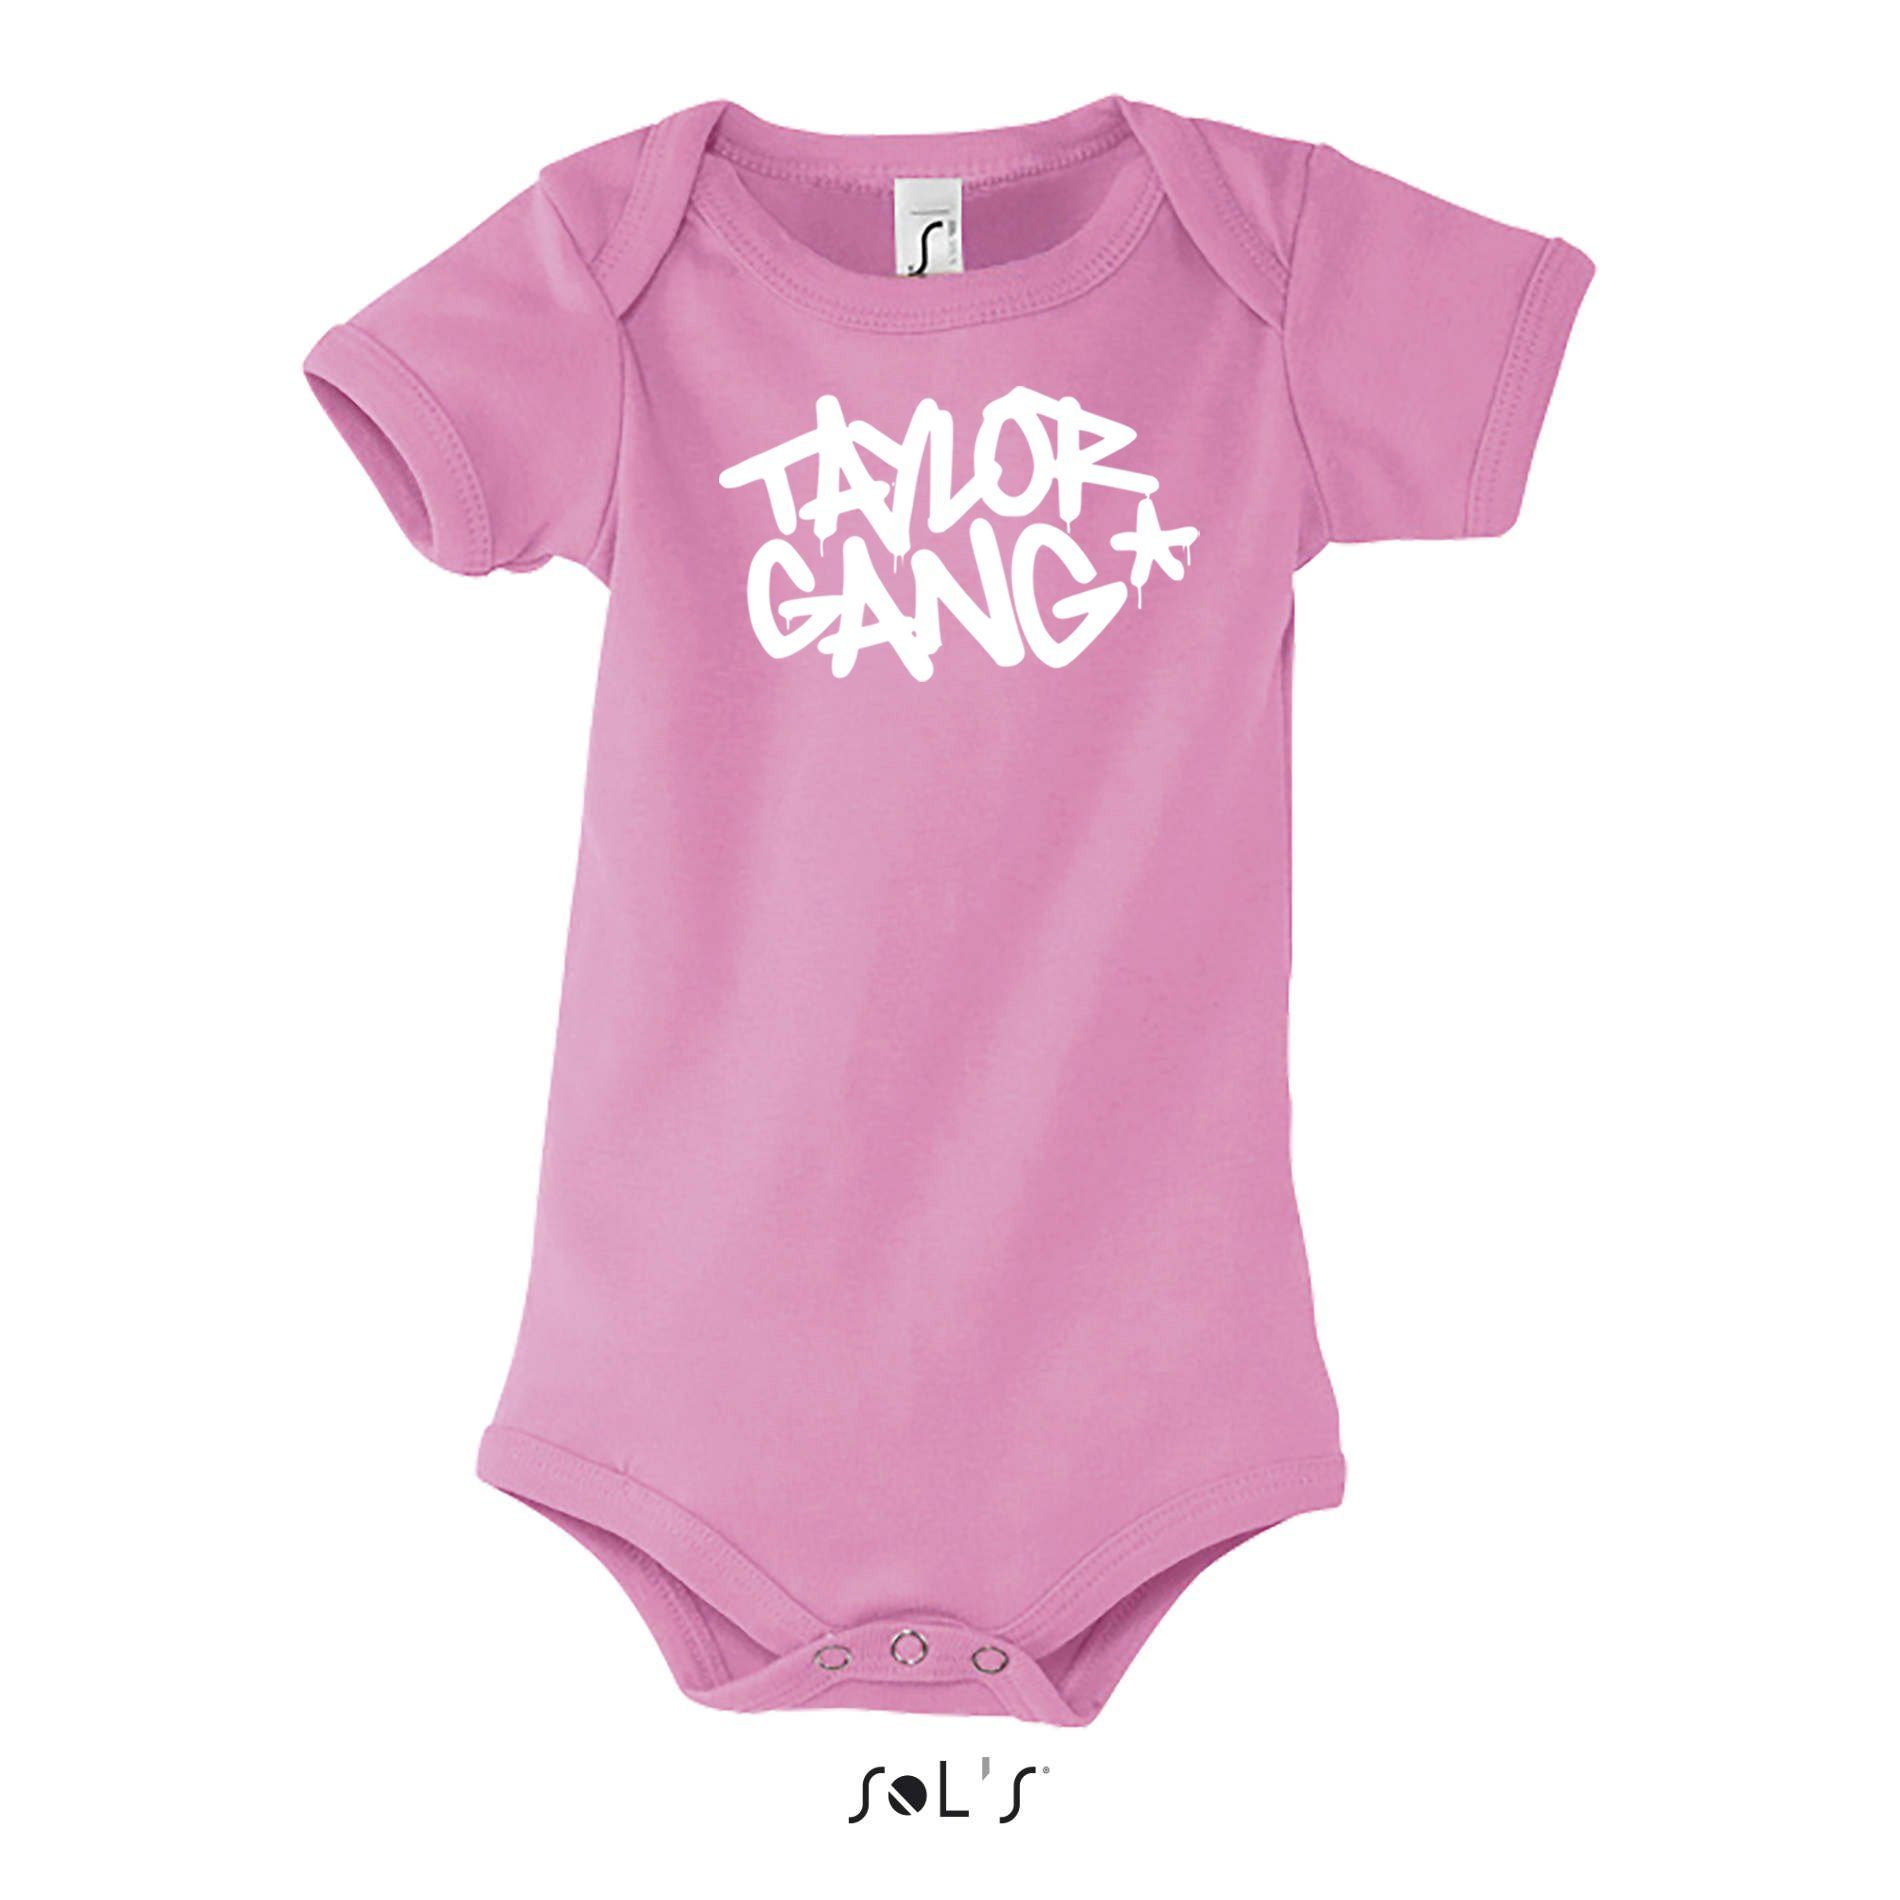 Blondie & Brownie Strampler Baby Strampler Body Shirt Taylor Gang Stern Wiz Rapper Khalifa Rosa